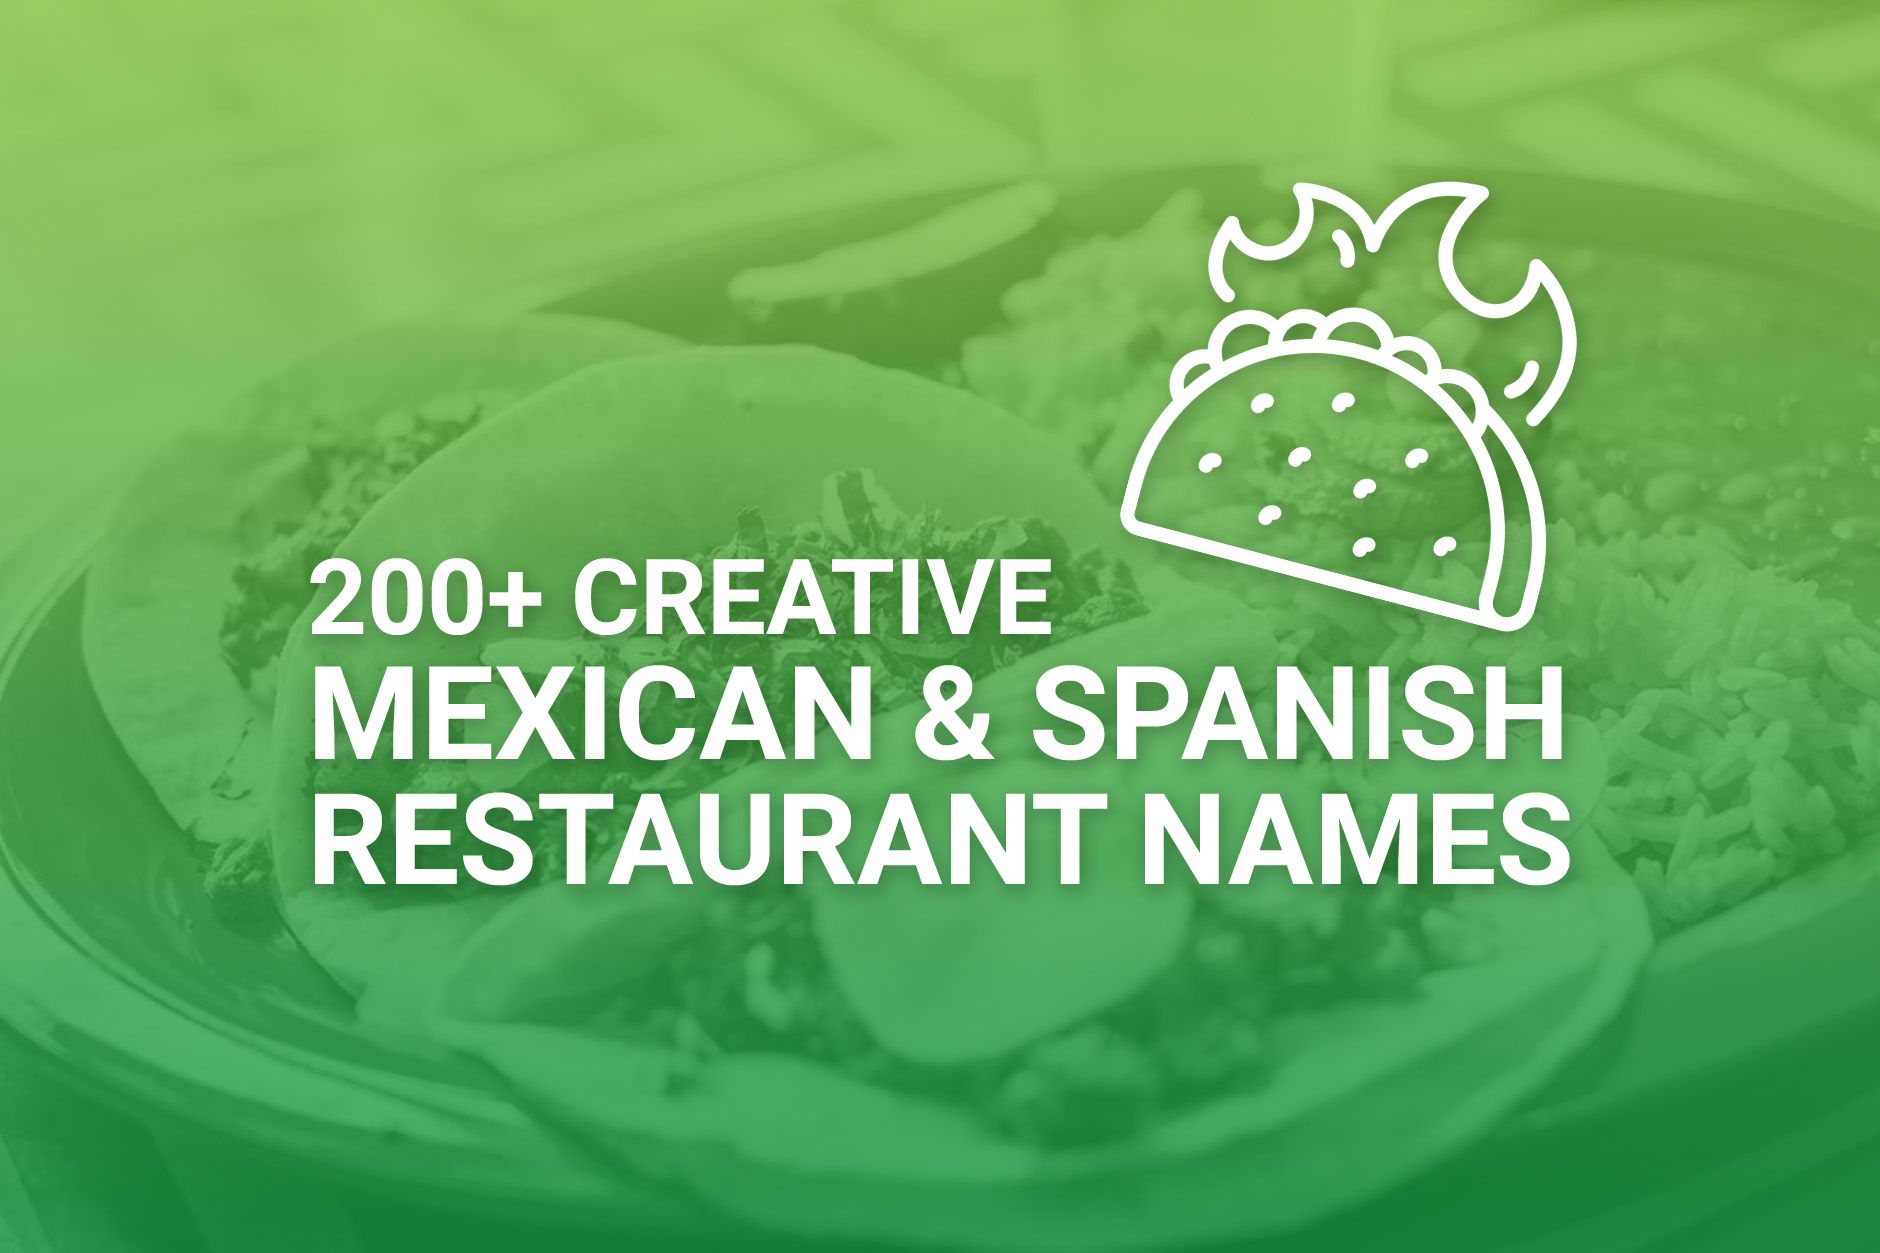 Creative Mexican & Spanish Restaurant Names